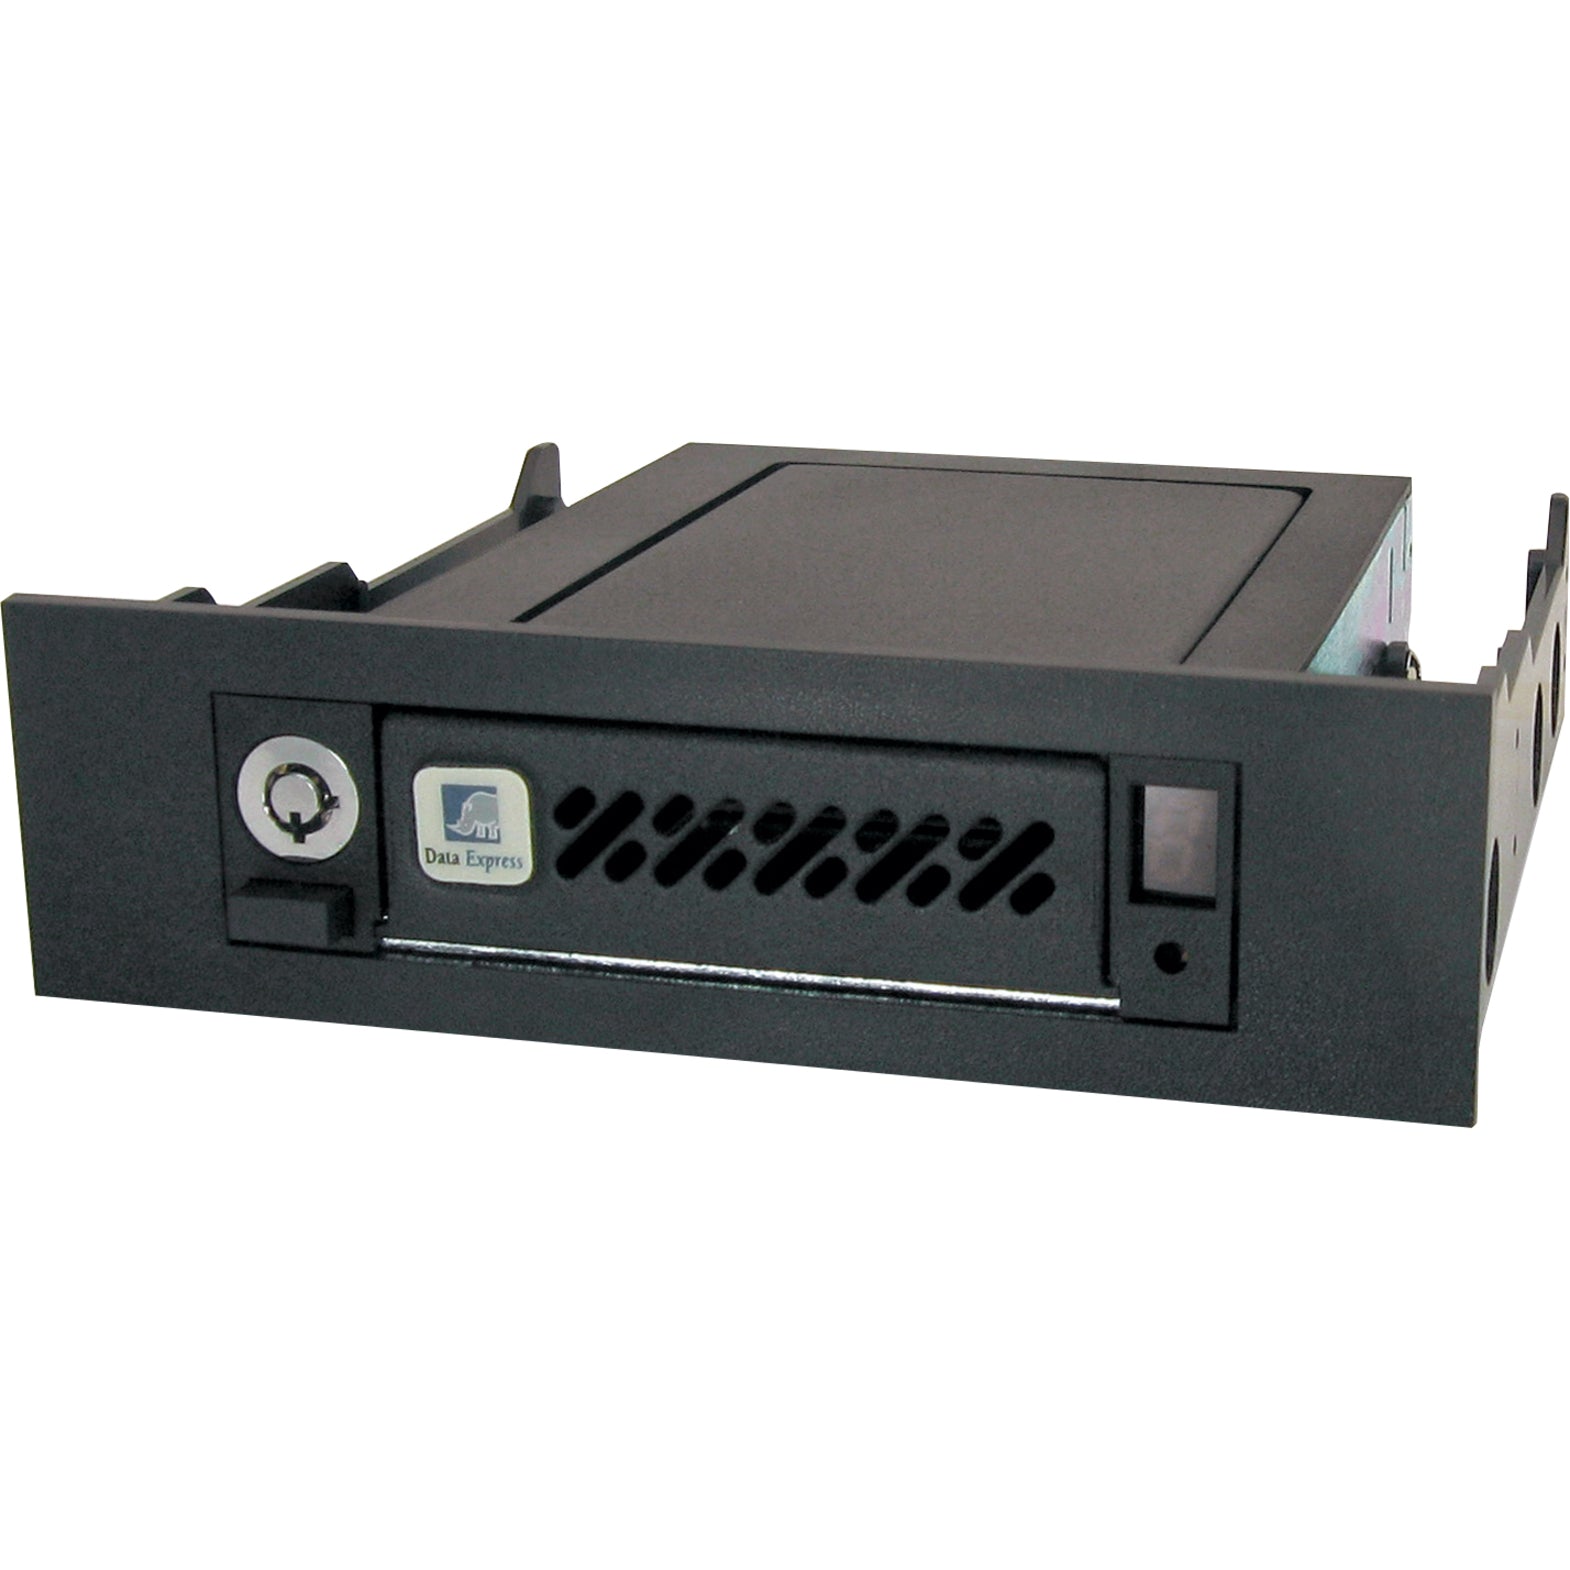 CRU 6417-6500-0500 Data Express 50 Drive Bay Adapter, Black - Easy Data Storage Solution